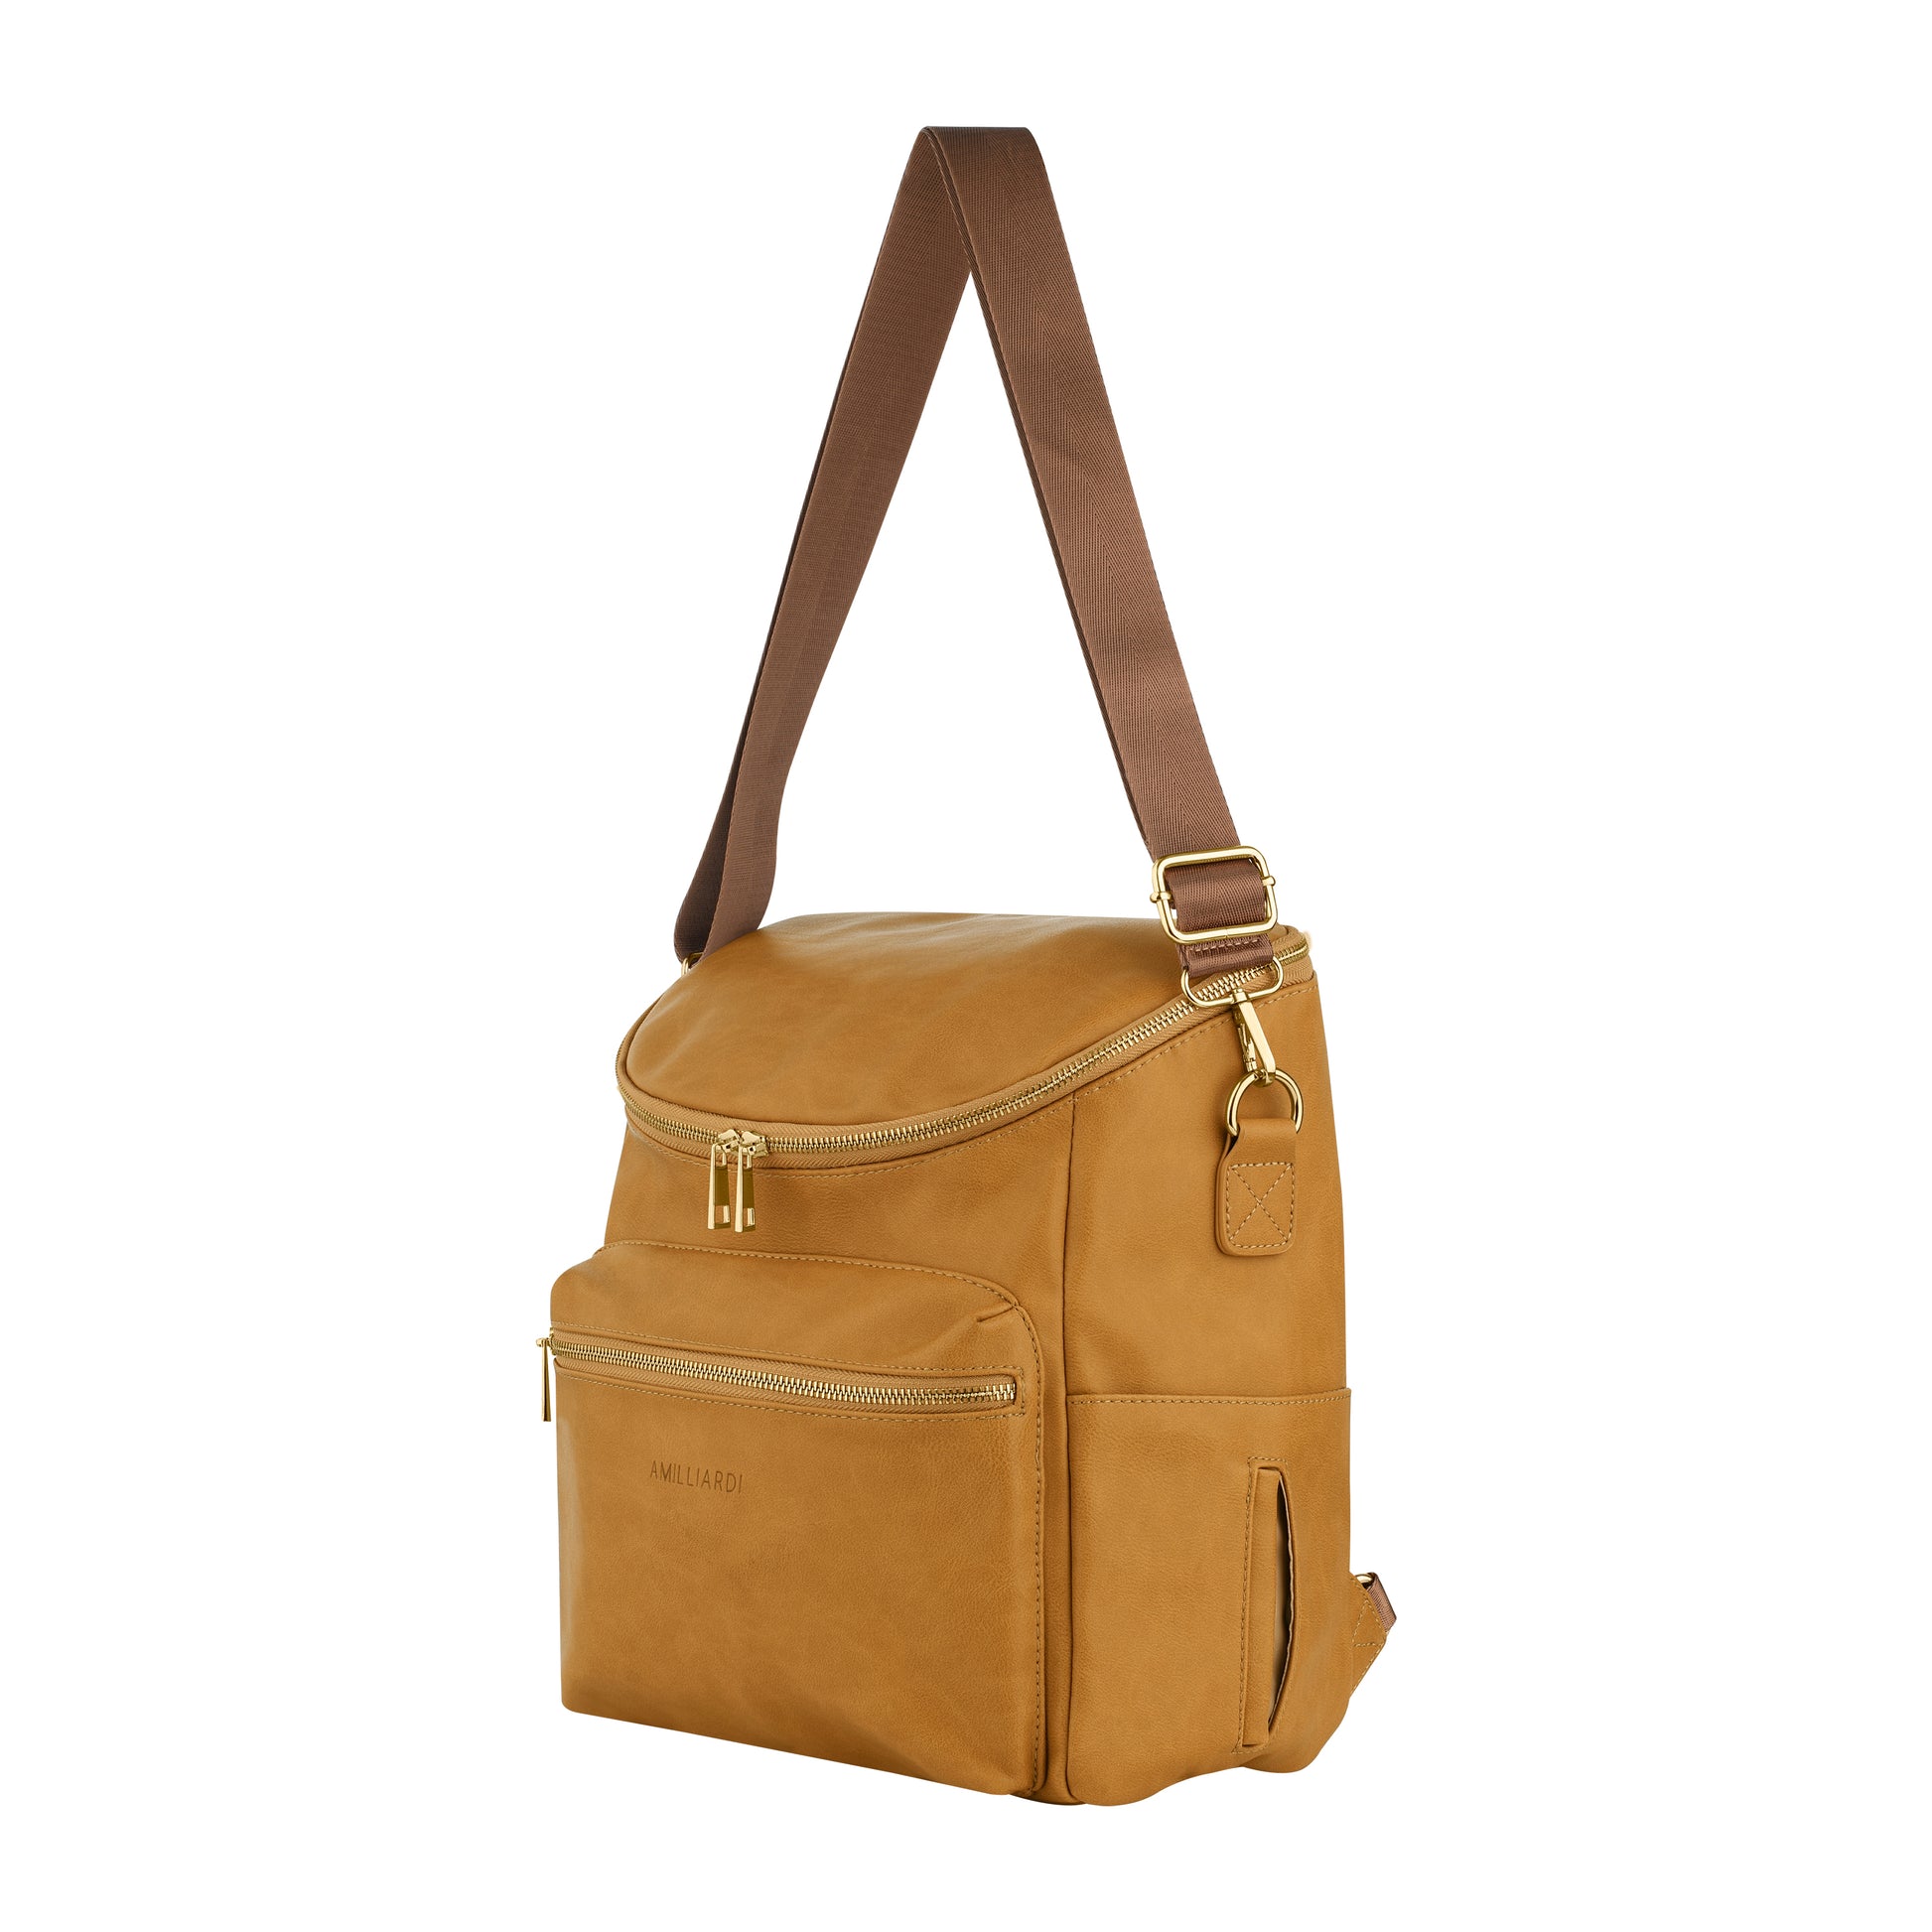 Amilliardi Diaper Bag Backpack - 2 Insulated Bottle Holders - Detachable Stroller Straps - Caramel Vegan Leather - Small